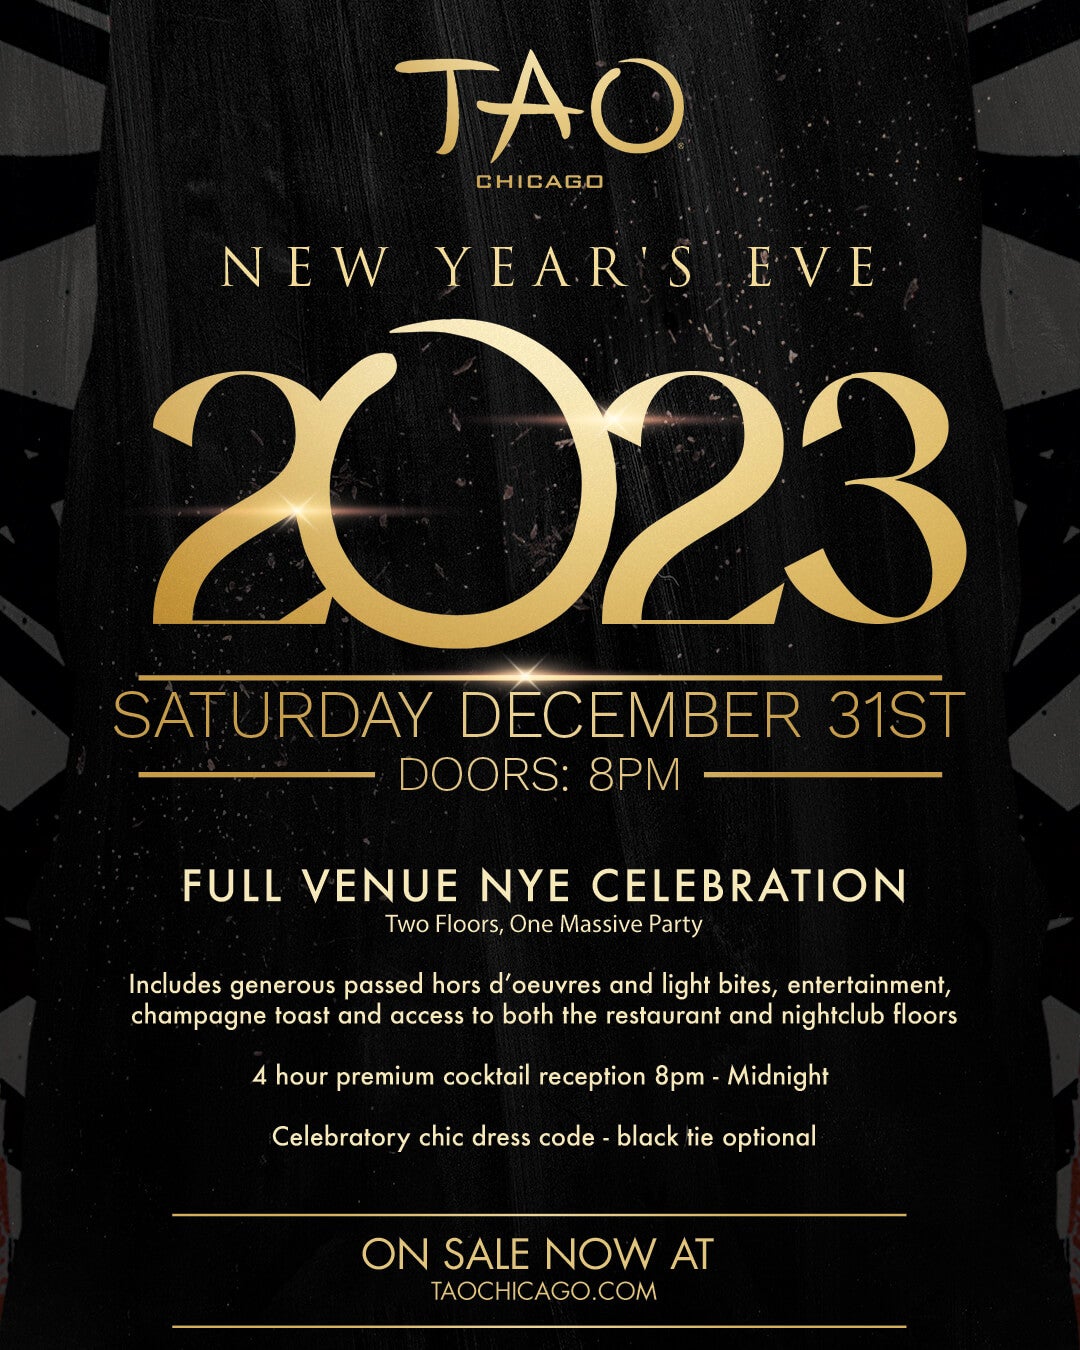 12/31/22 - New Years Eve - TAO Chicago - Tao Group Hospitality